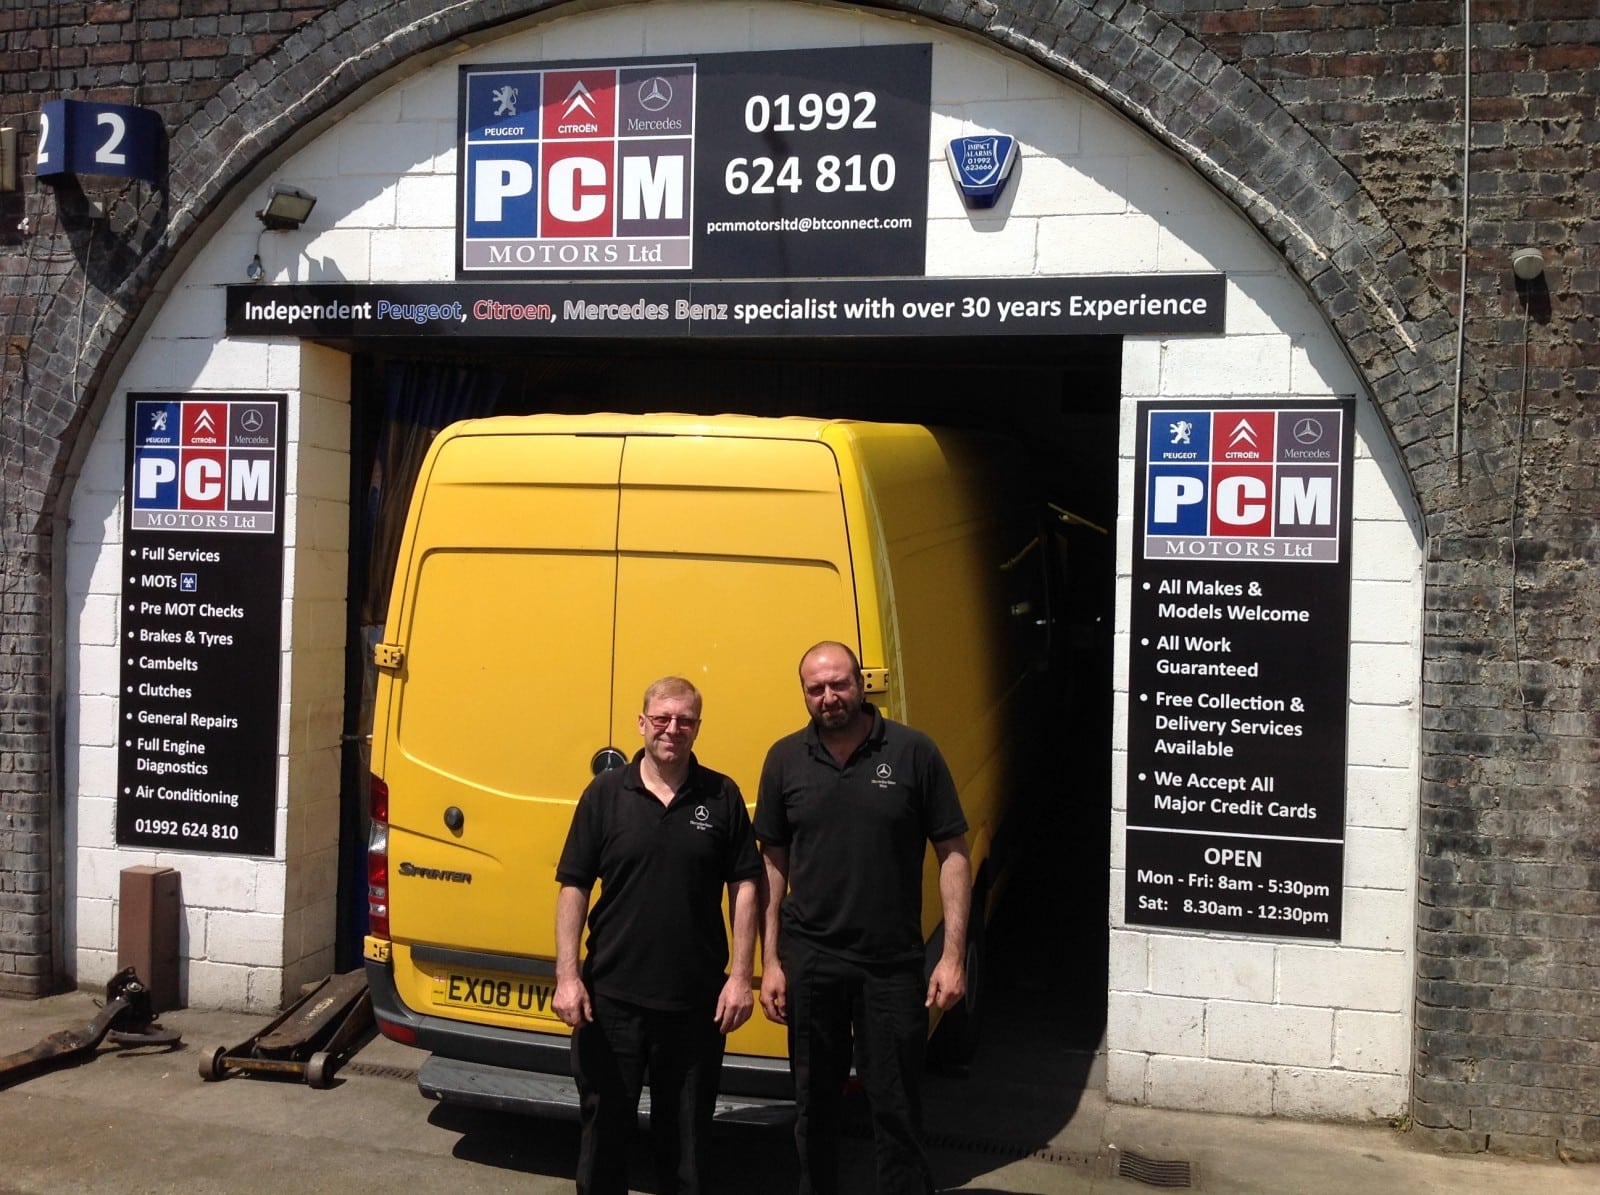 PCM Motors Ltd